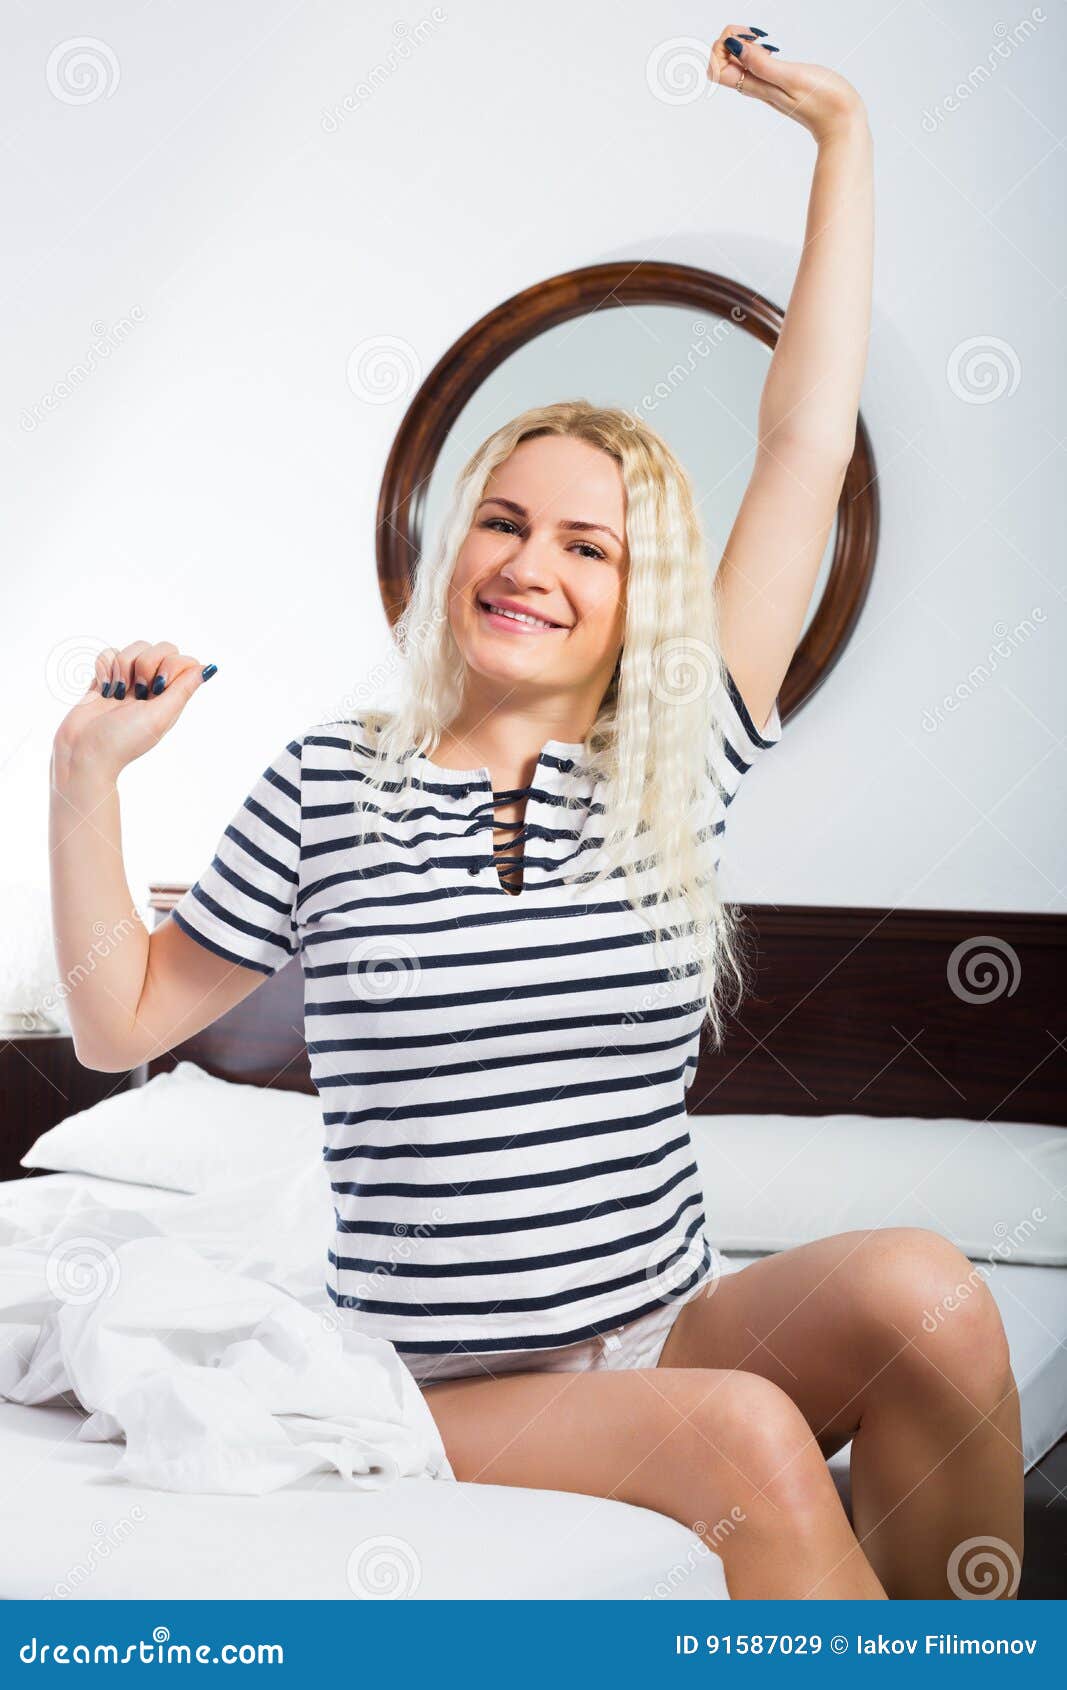 happy woman with long hair awaking